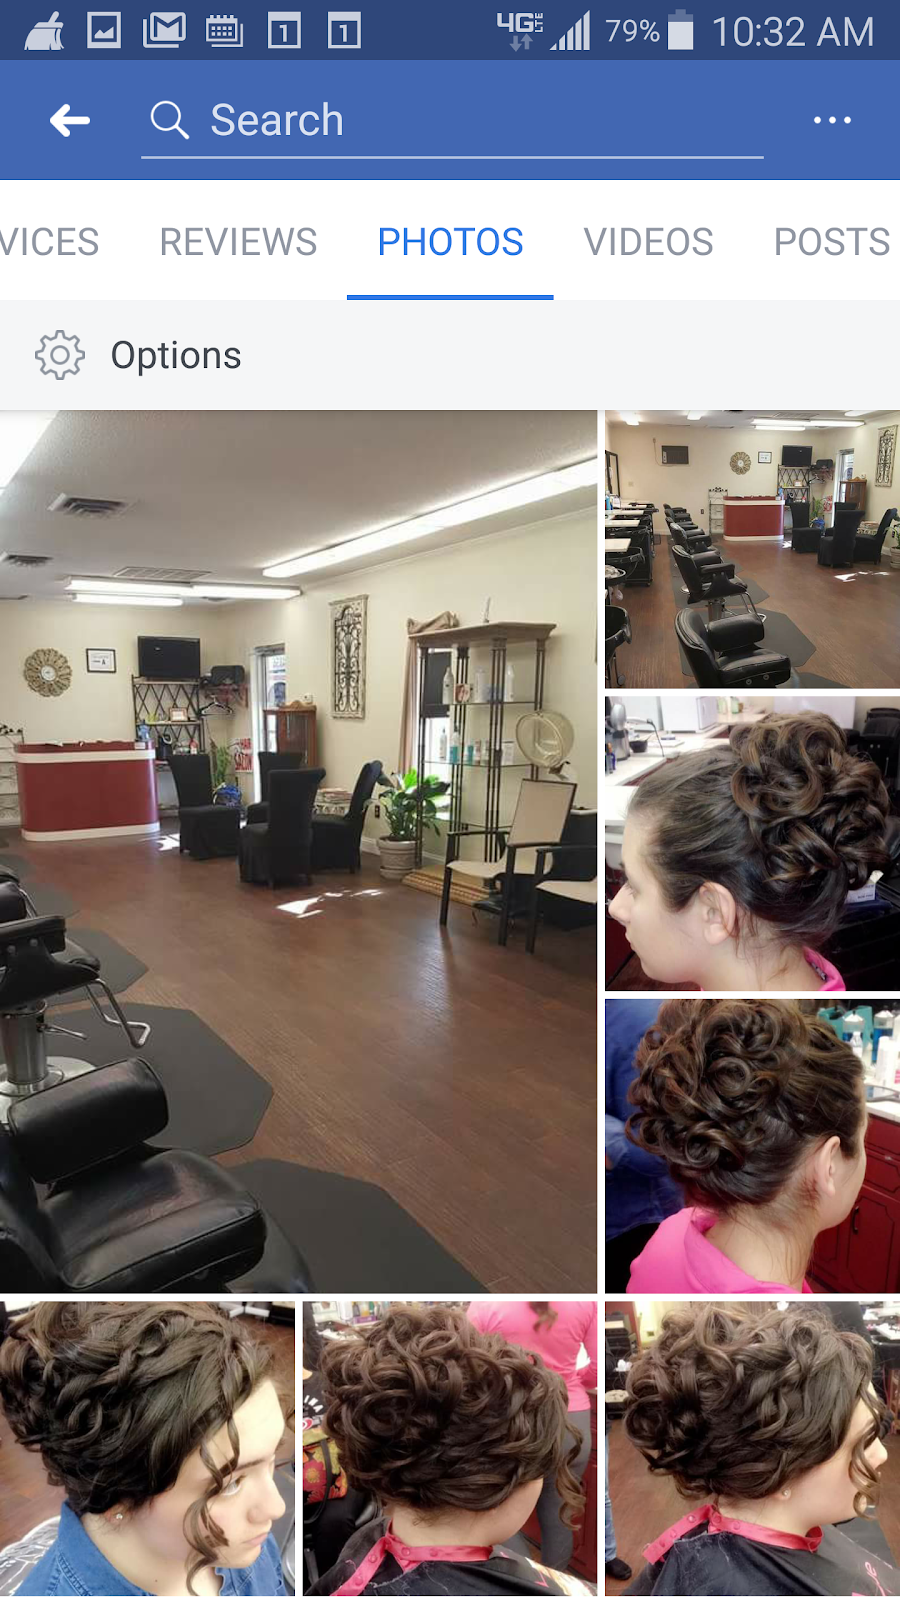 LynDione Hair Salon | 4856 Country Club Rd, Winston-Salem, NC 27104, USA | Phone: (336) 768-0505